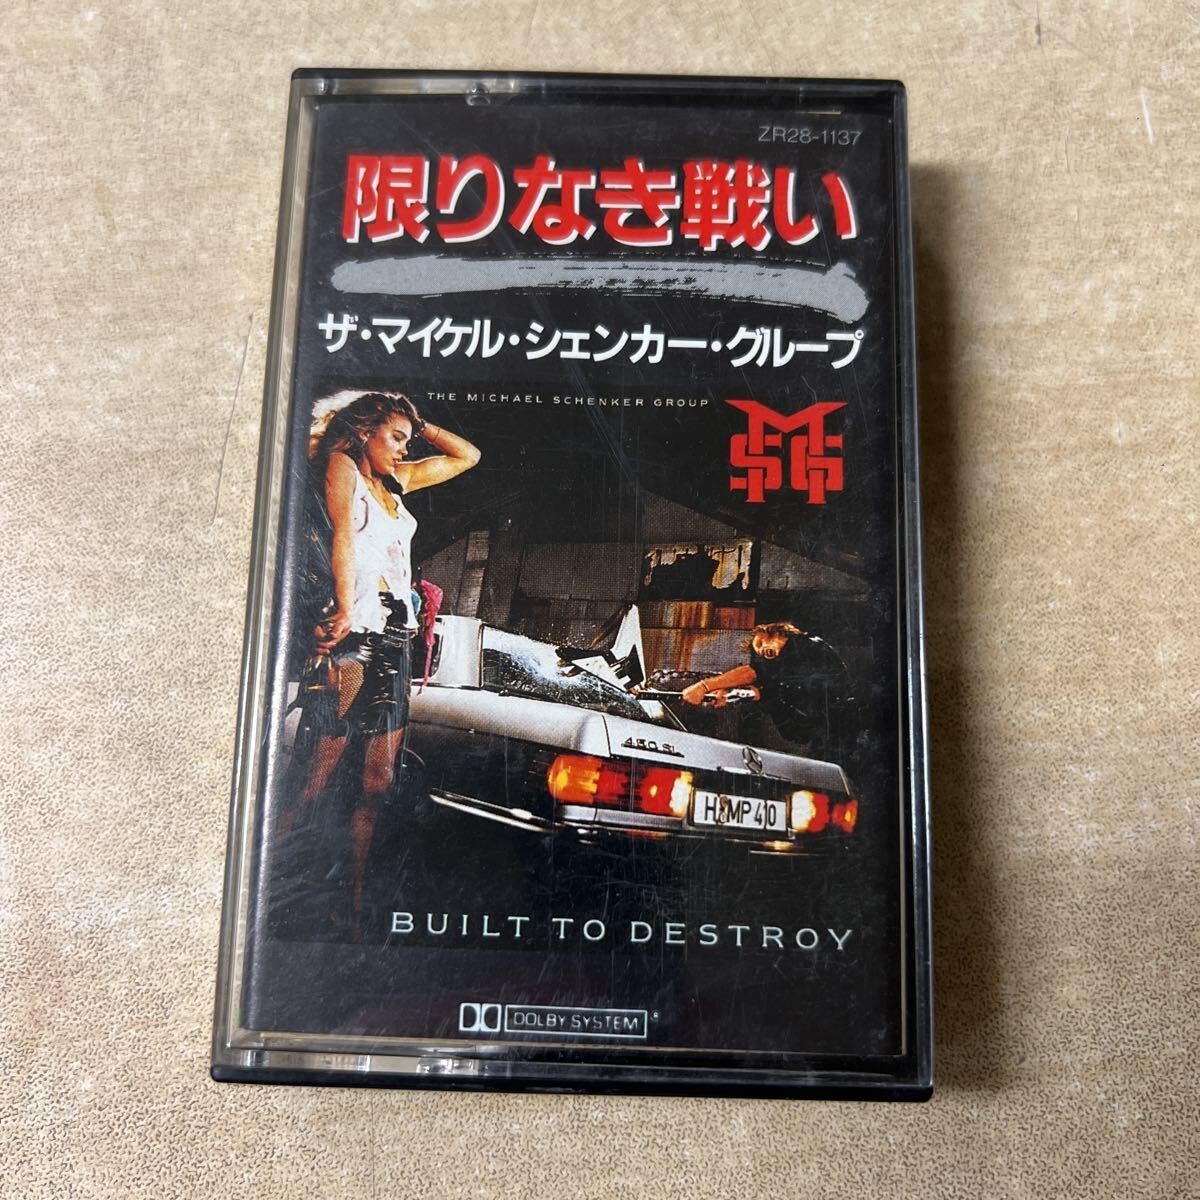 FJ0605 The * Michael *shen car * group limit not war . cassette tape Japan MSG Built to Destroy Gary * bar tenJapan